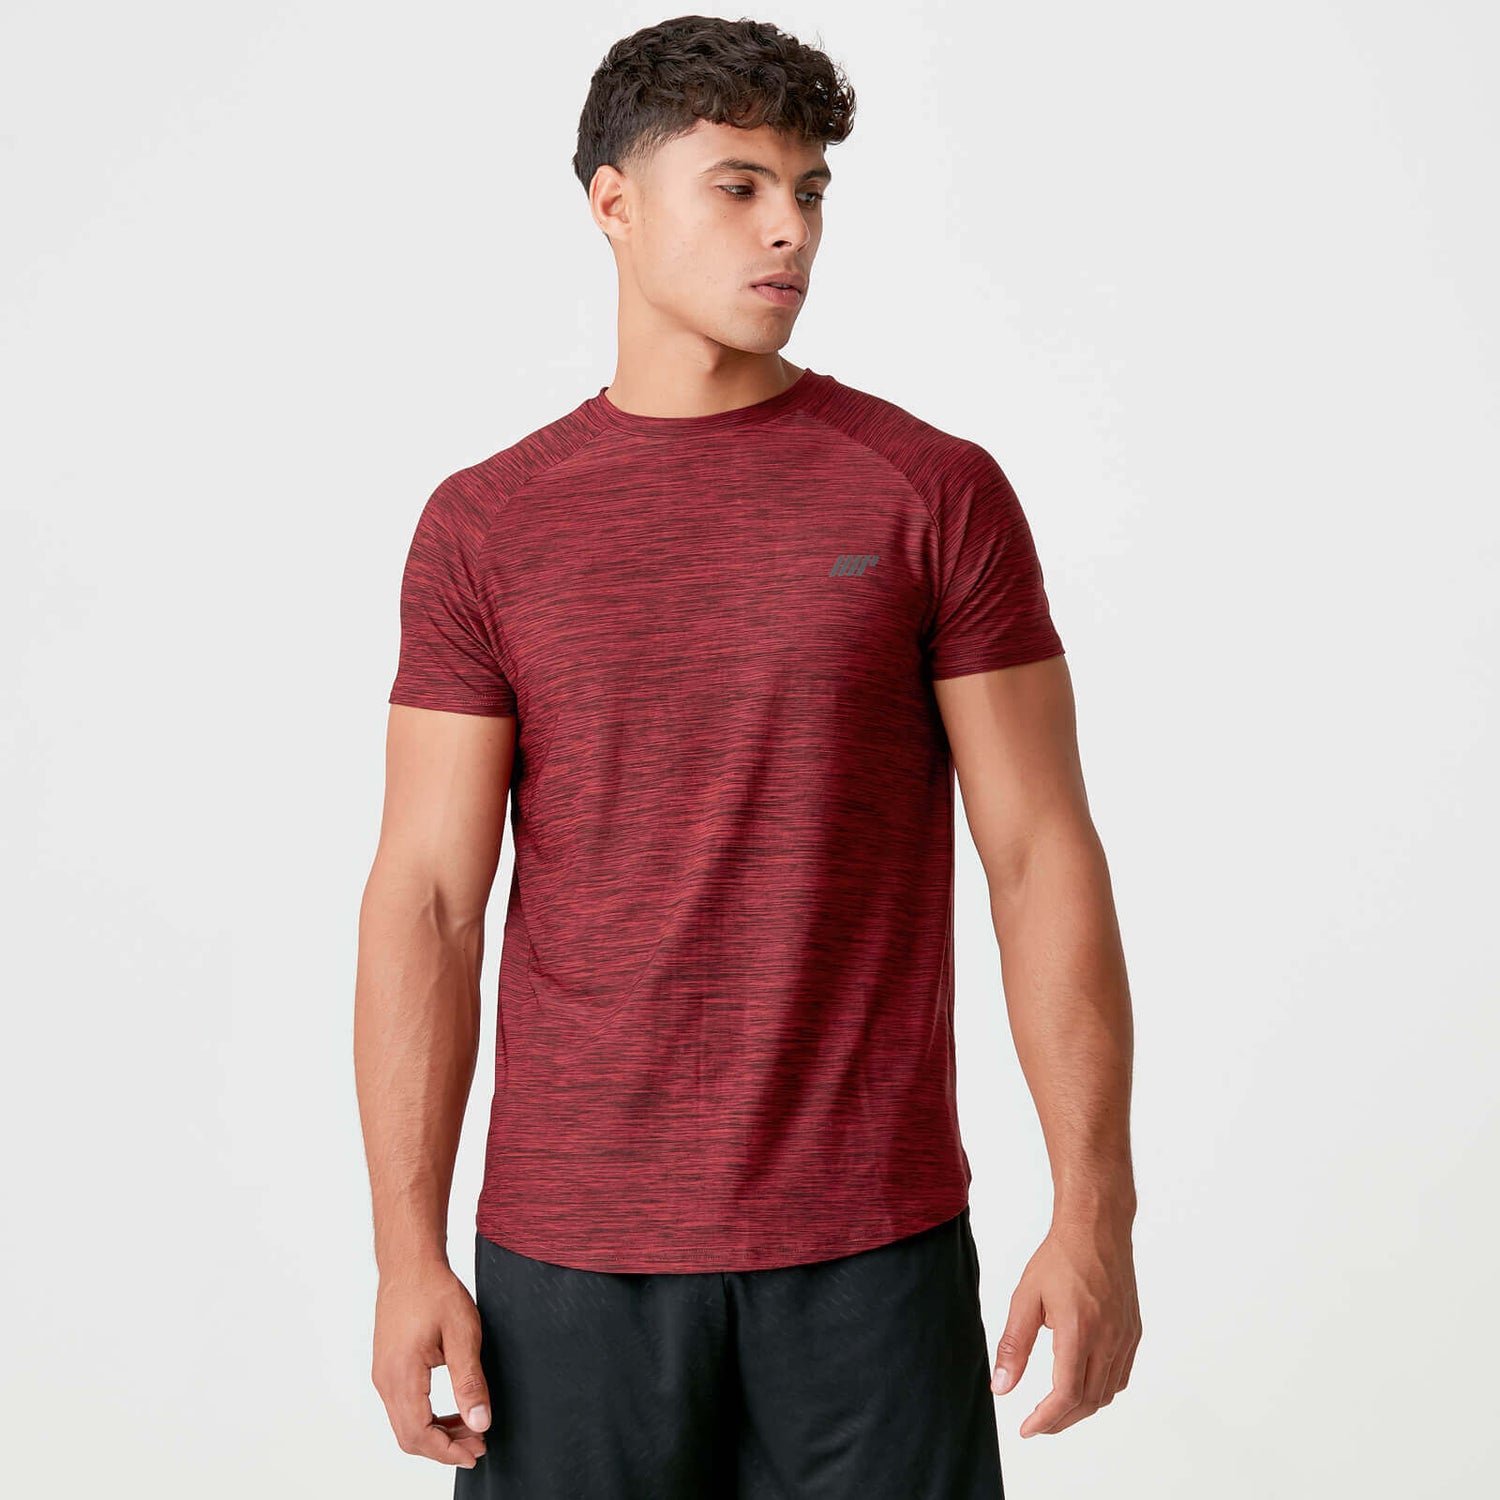 Buy Men's Dry-Tech Sweat-Wicking Gym Shirt, Red Marl